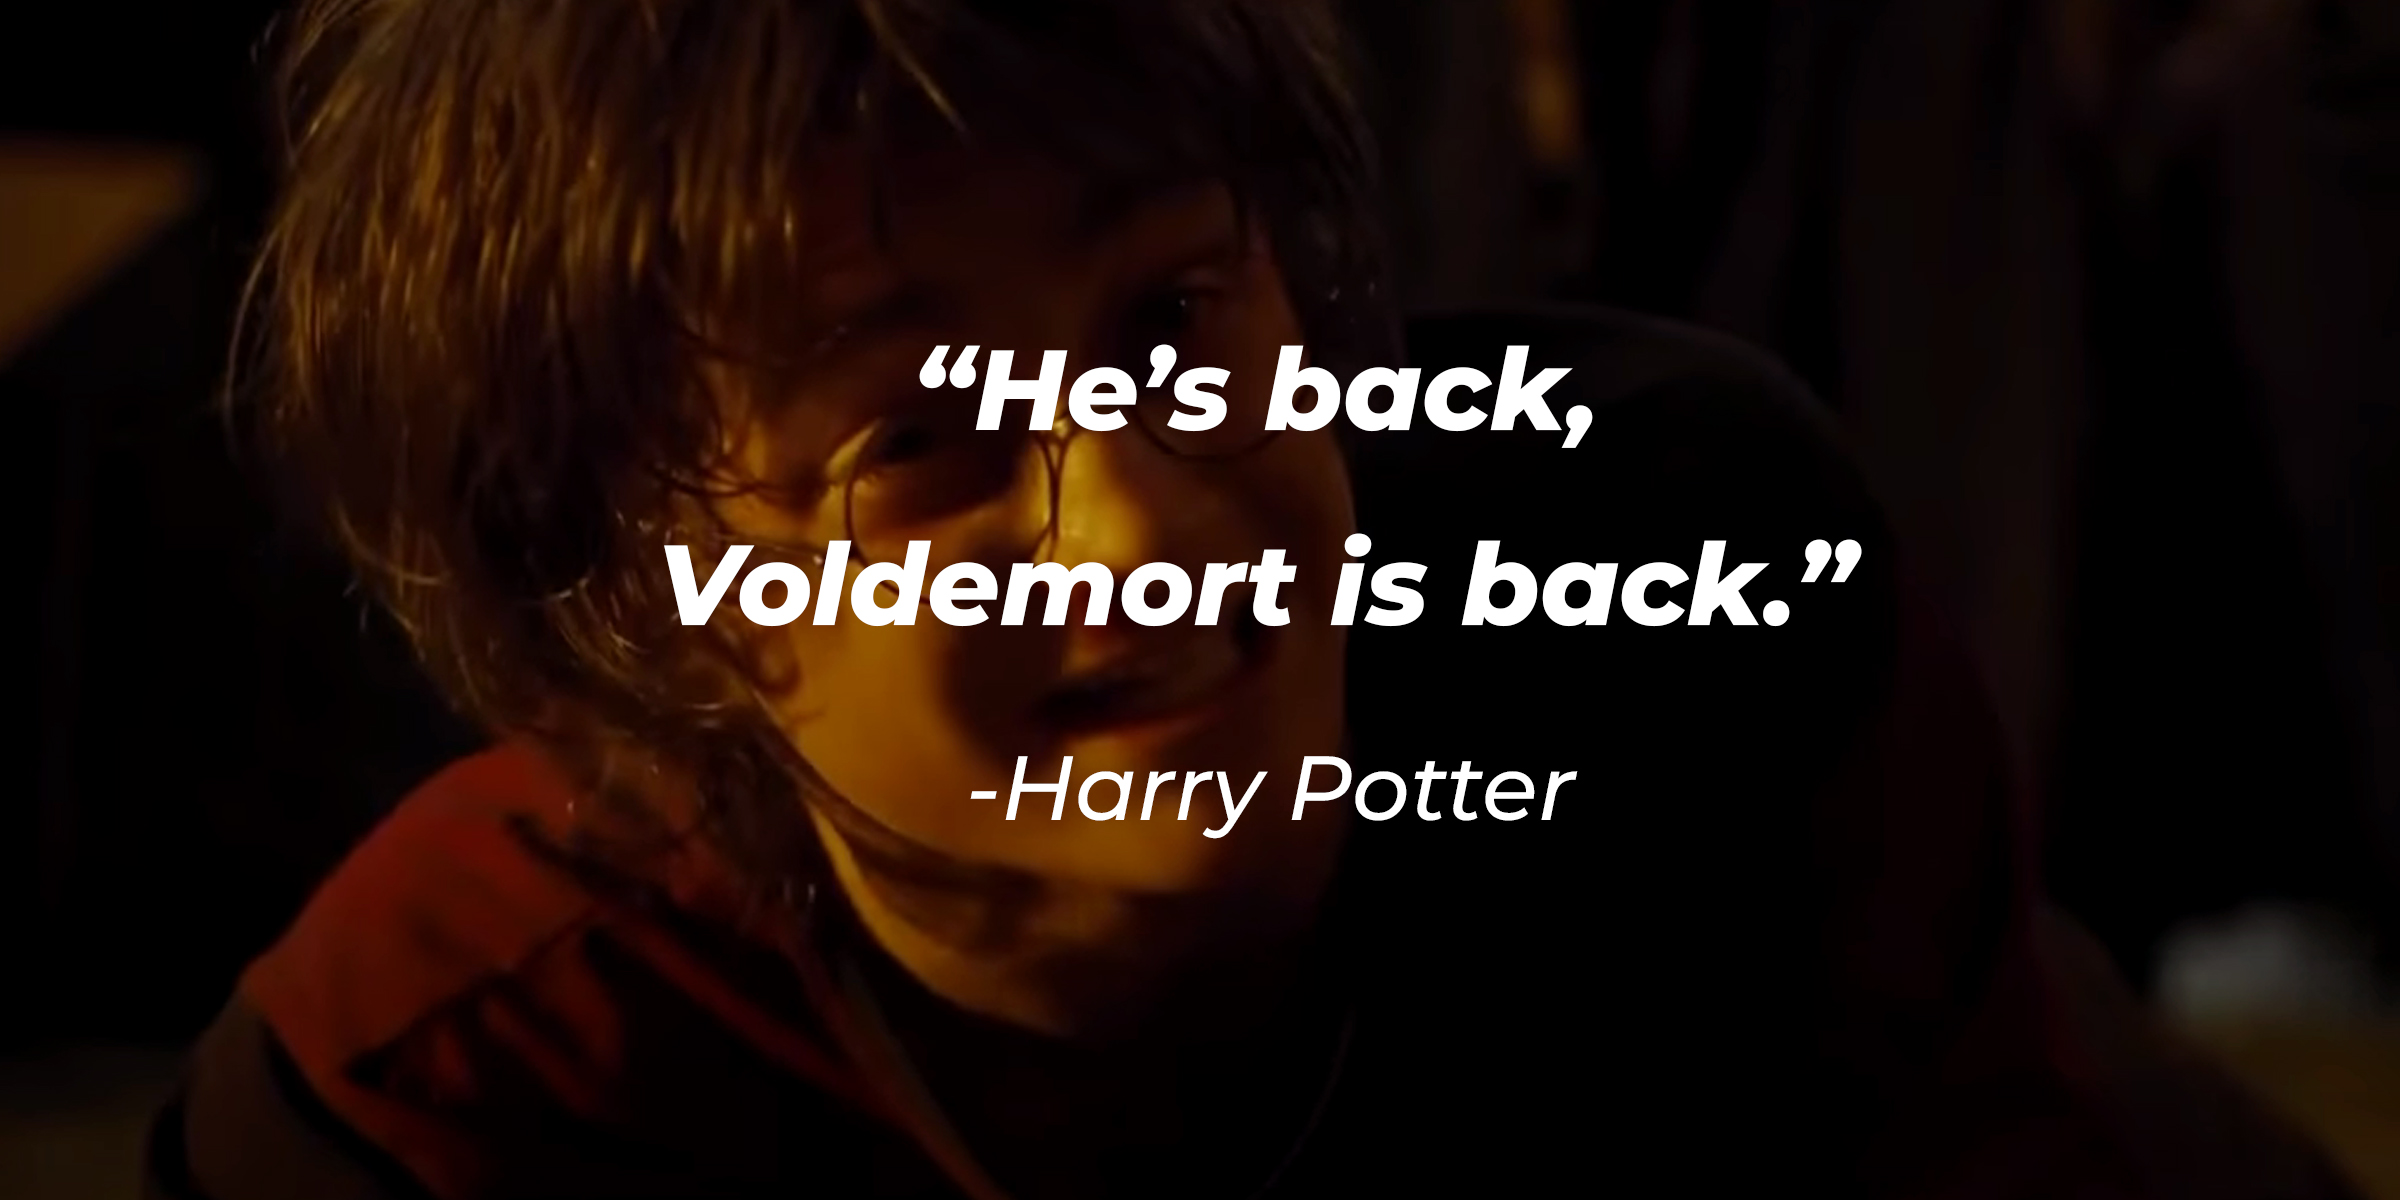 Harry Potter's quote: "He's back, Voldemort is back." | Source: facebook.com/harrypotter